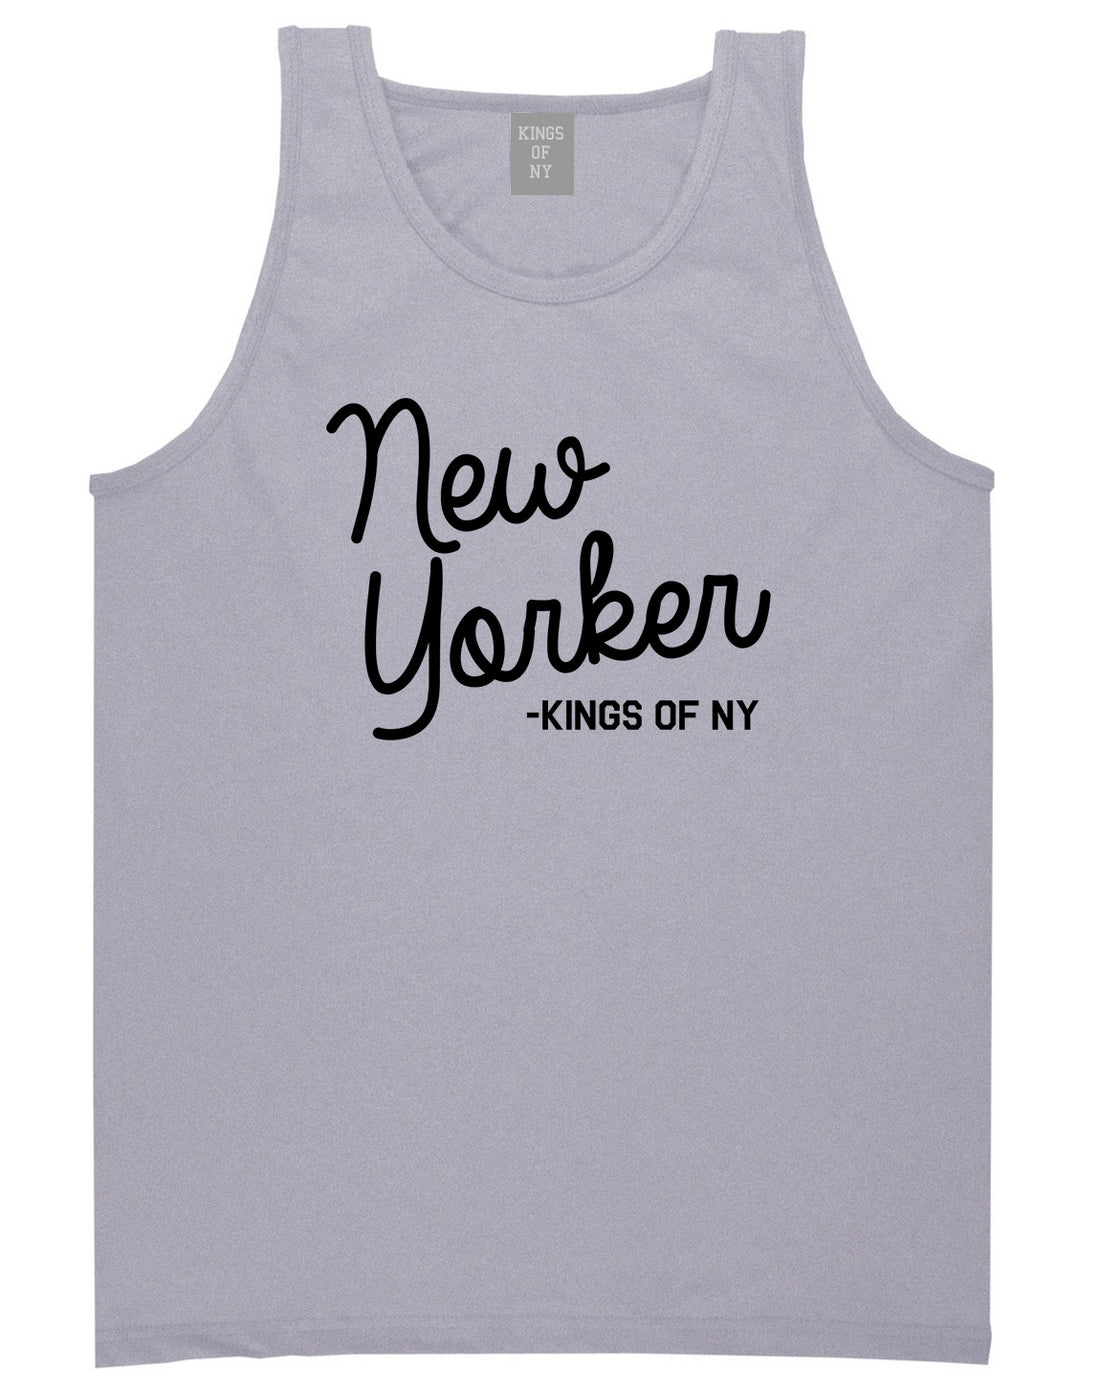 New Yorker Script Mens Tank Top Shirt Grey by Kings Of NY